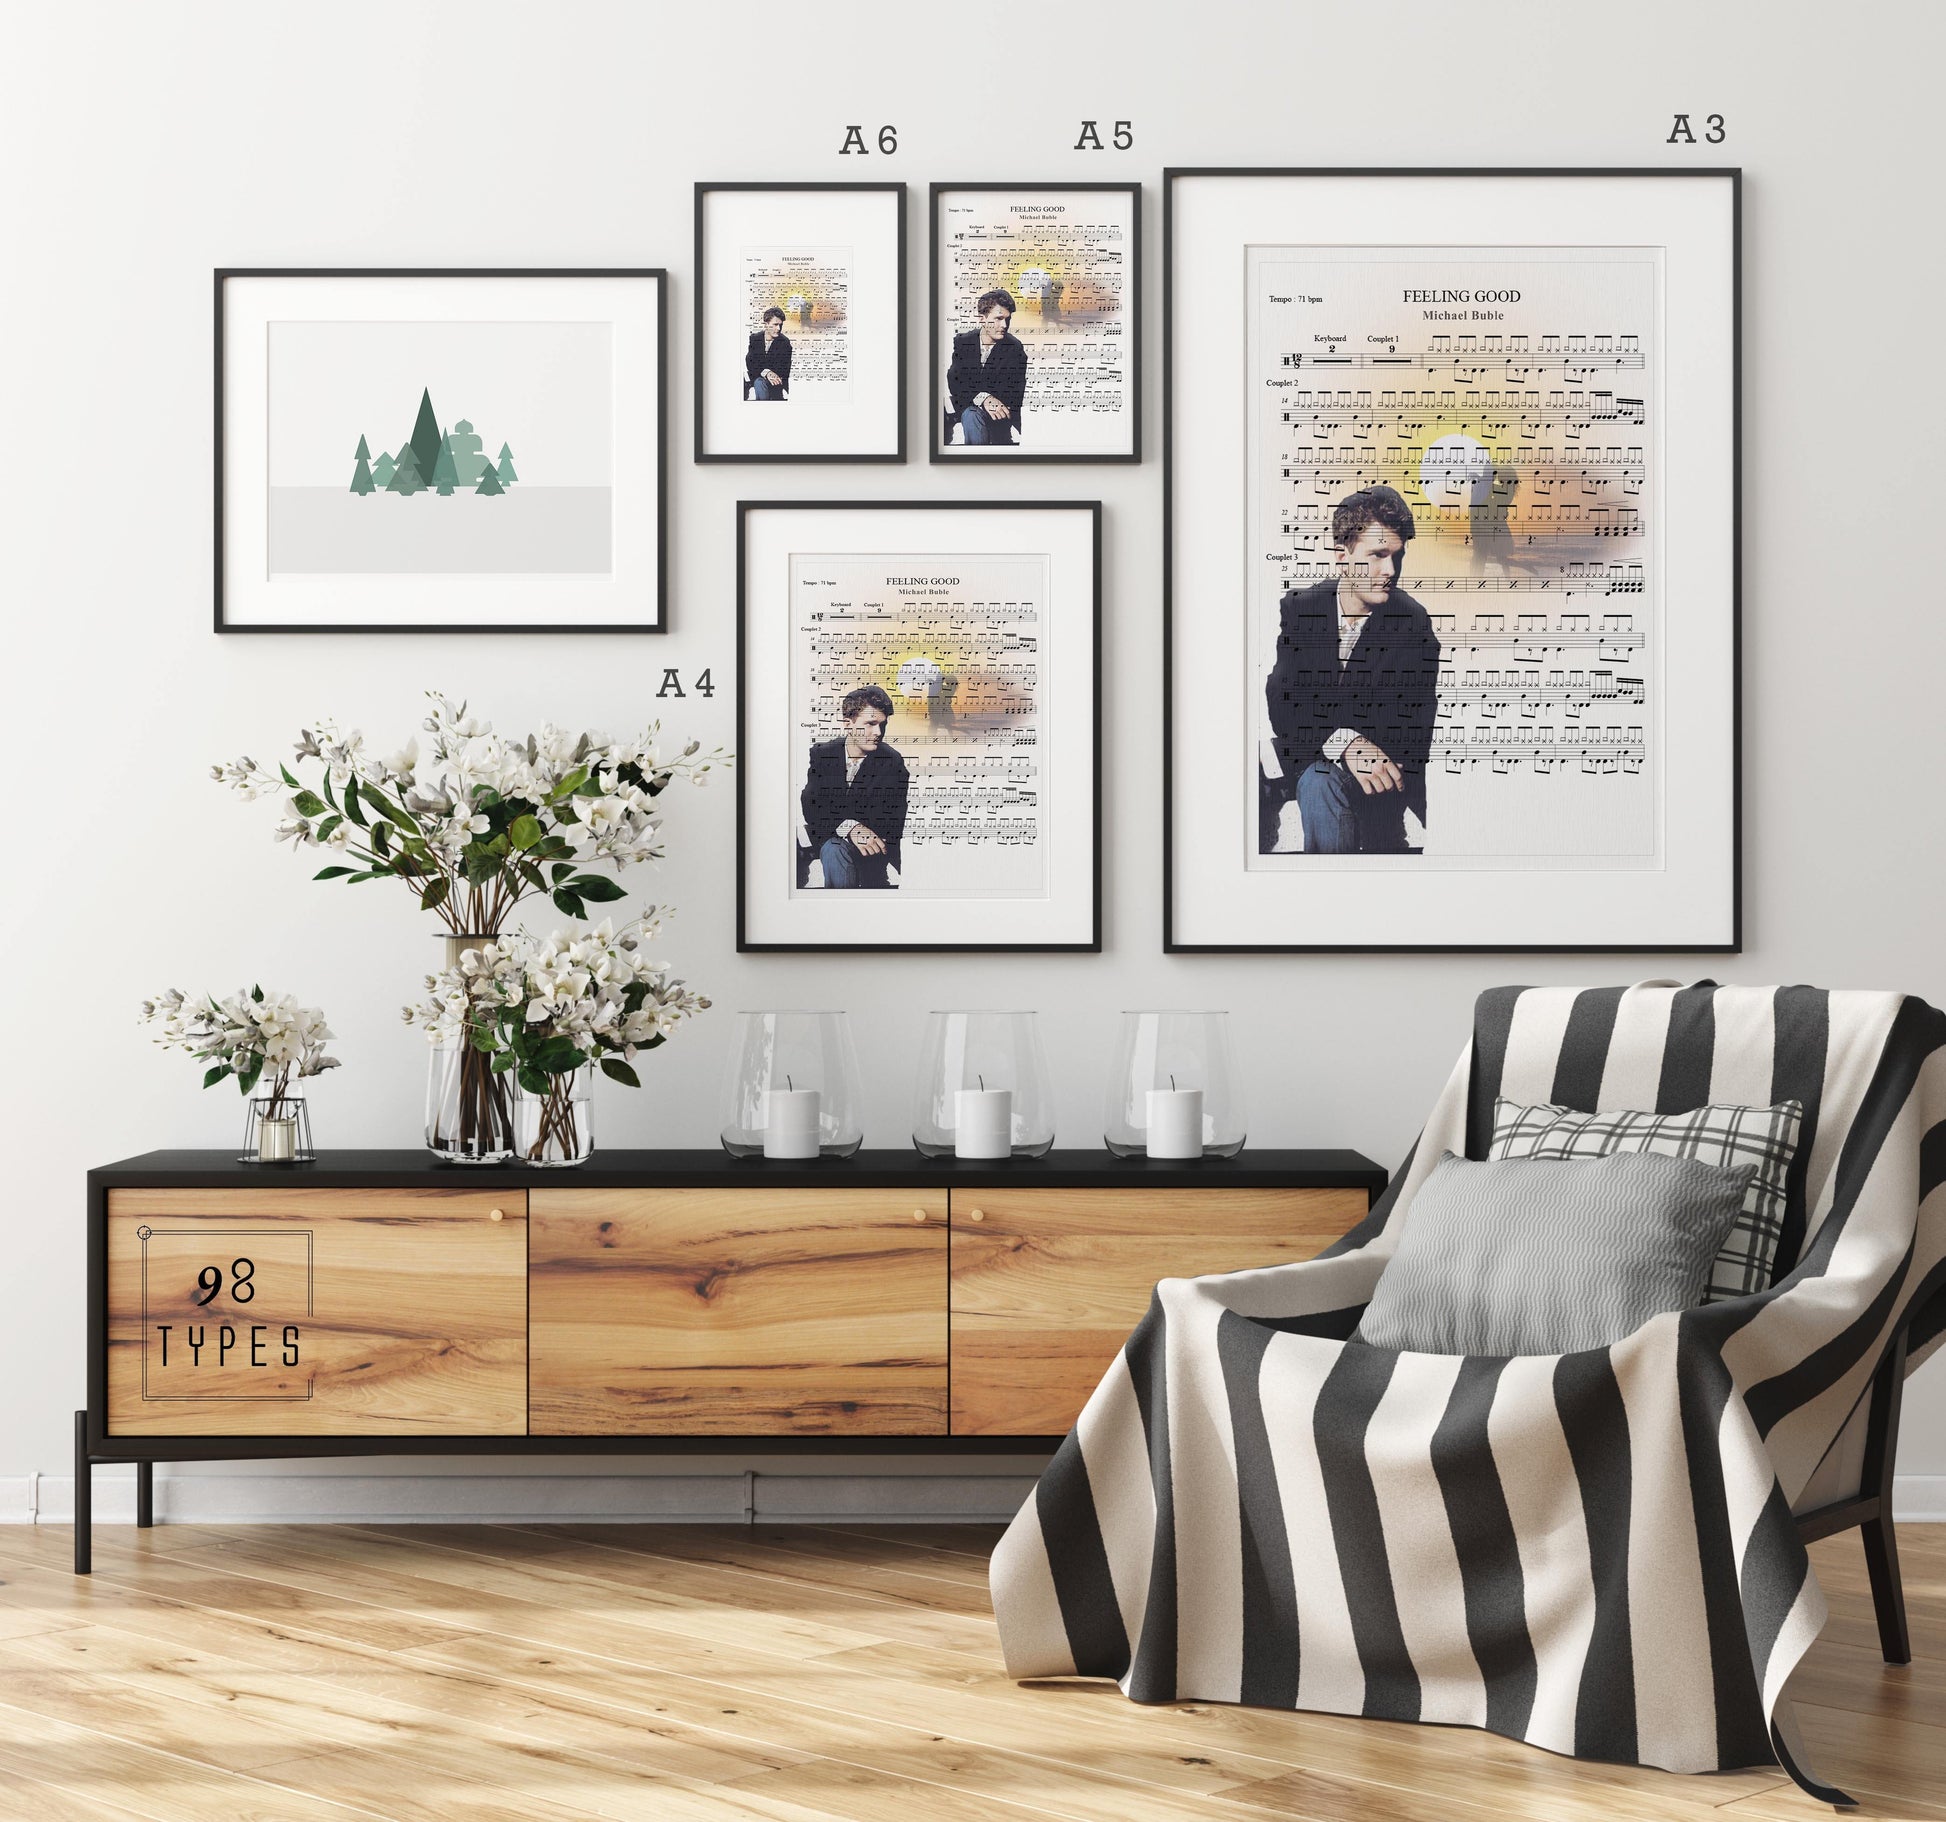 Michael Buble - Feeling Good Song Print | Sheet Music Wall Art | Song Music Sheet Notes Print